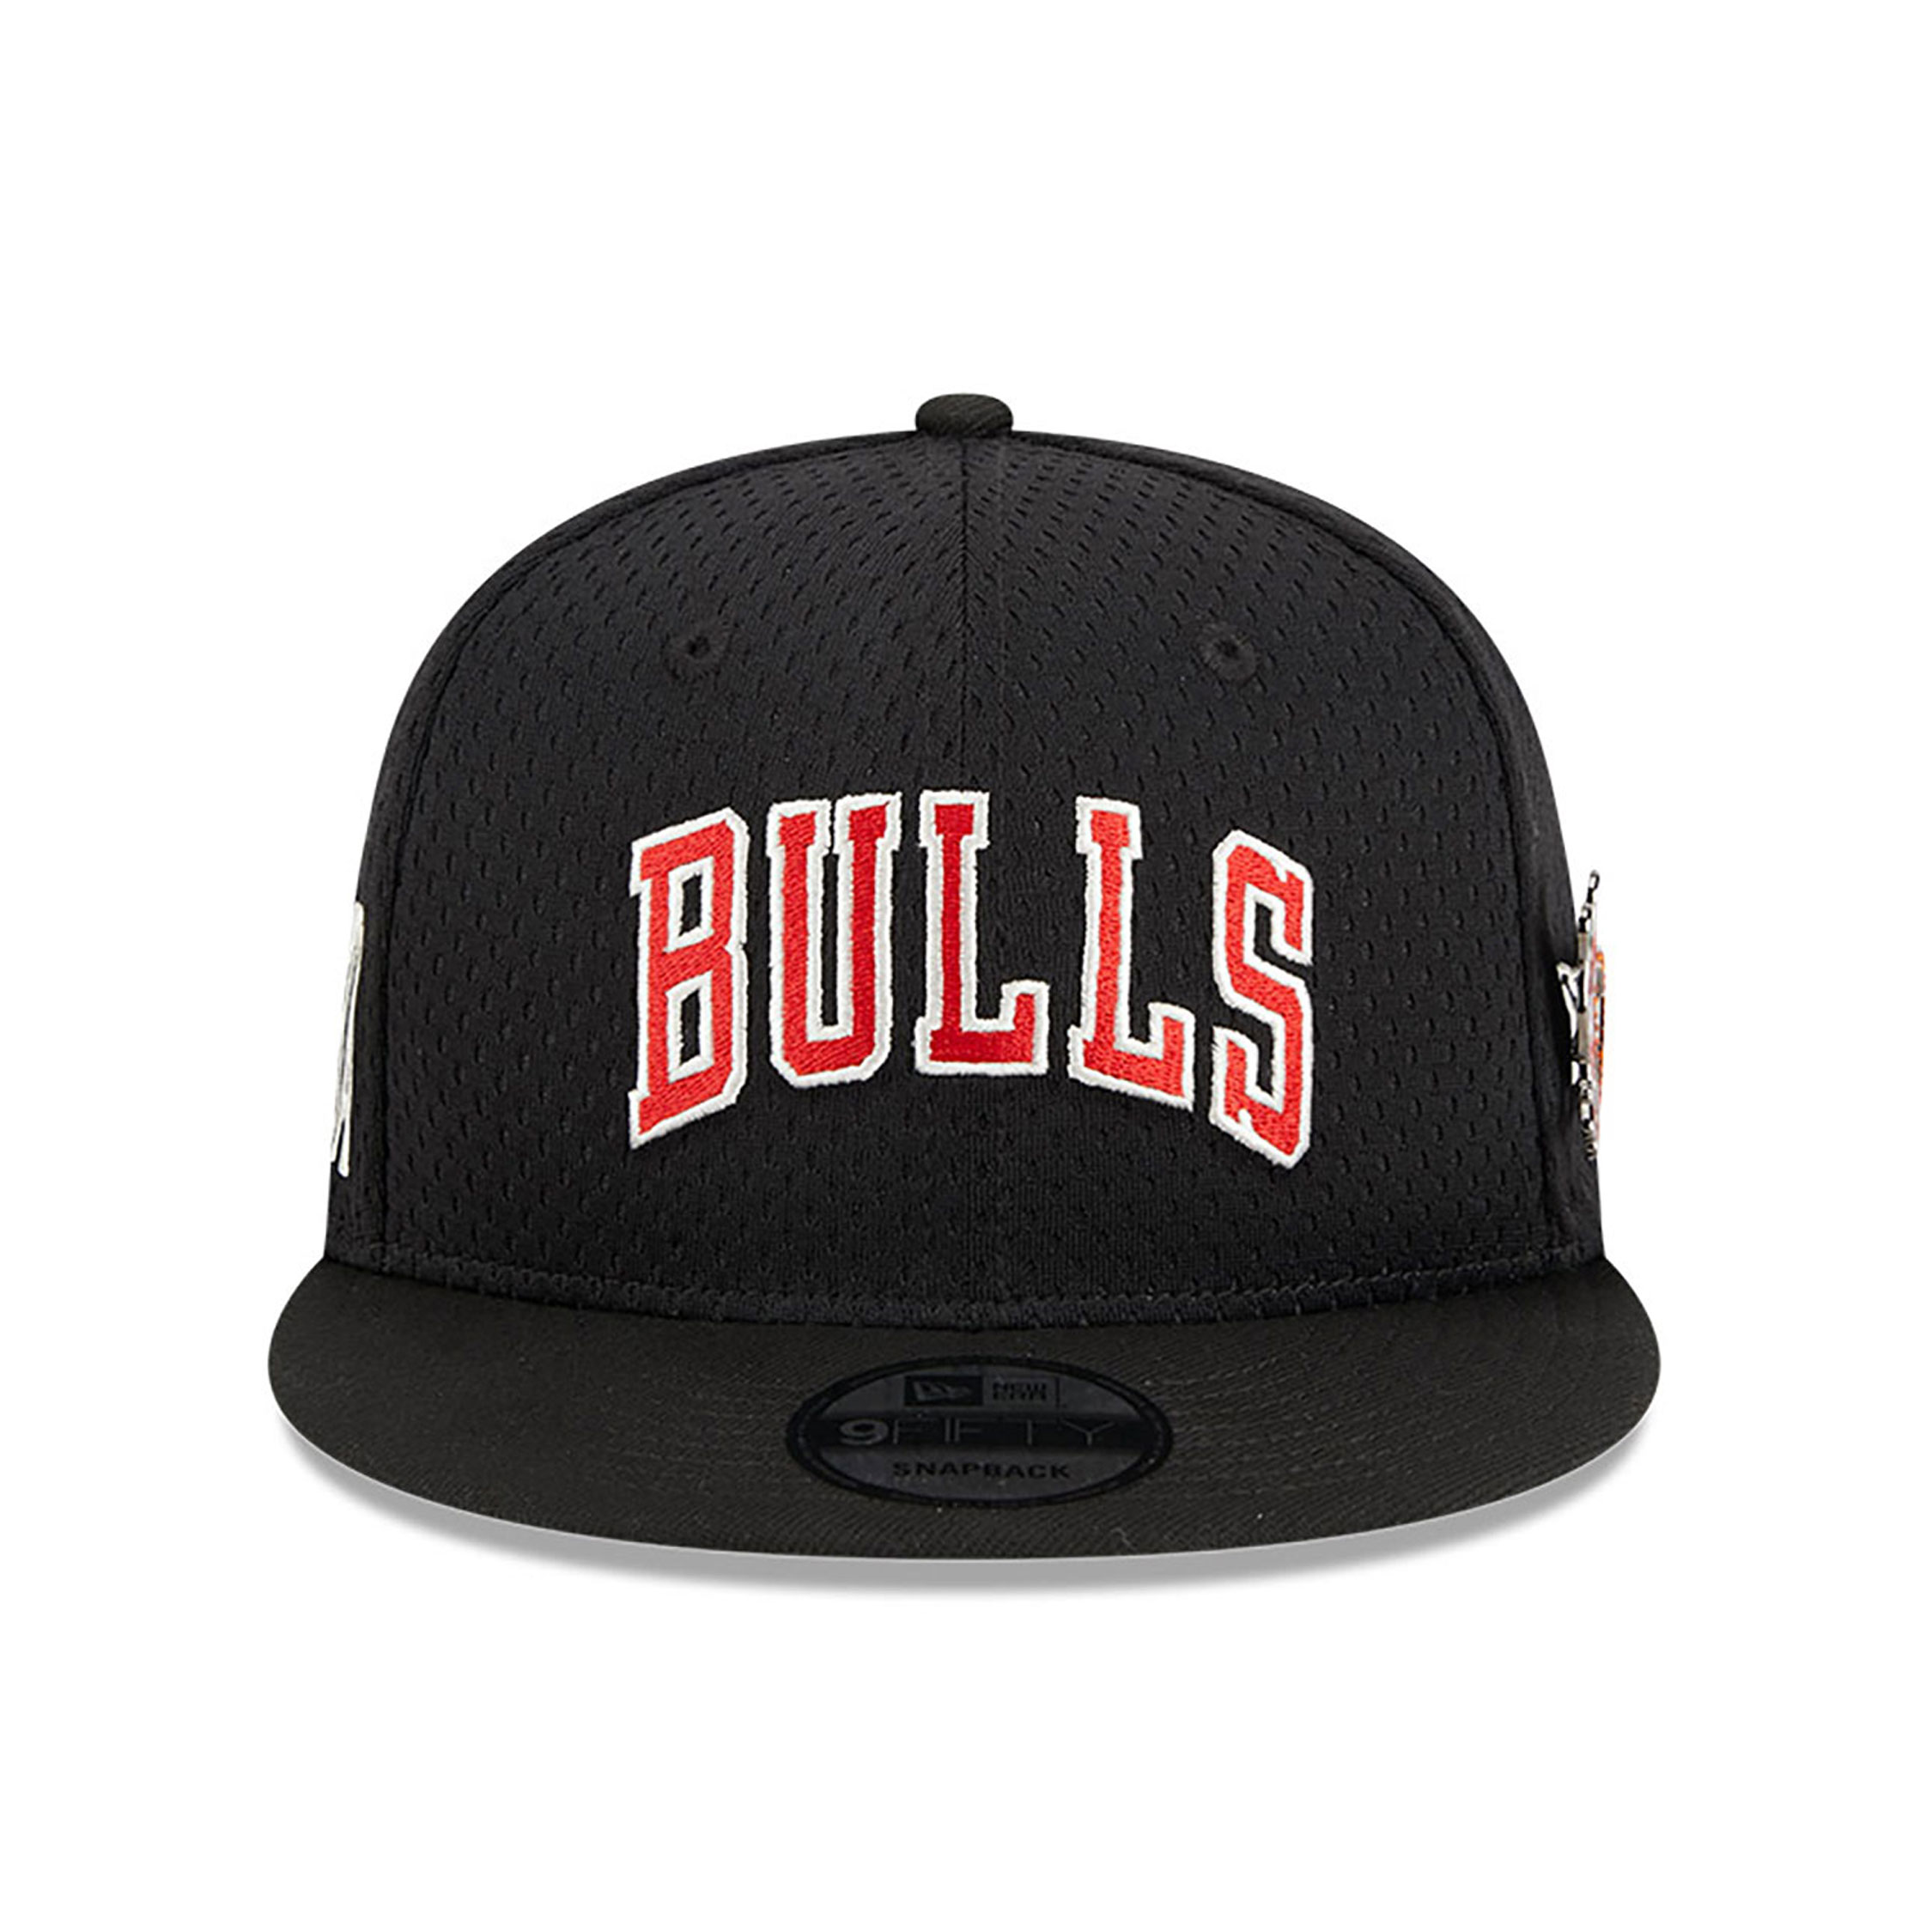 Chicago Bulls Post-Up Pin Black 9FIFTY Snapback Cap